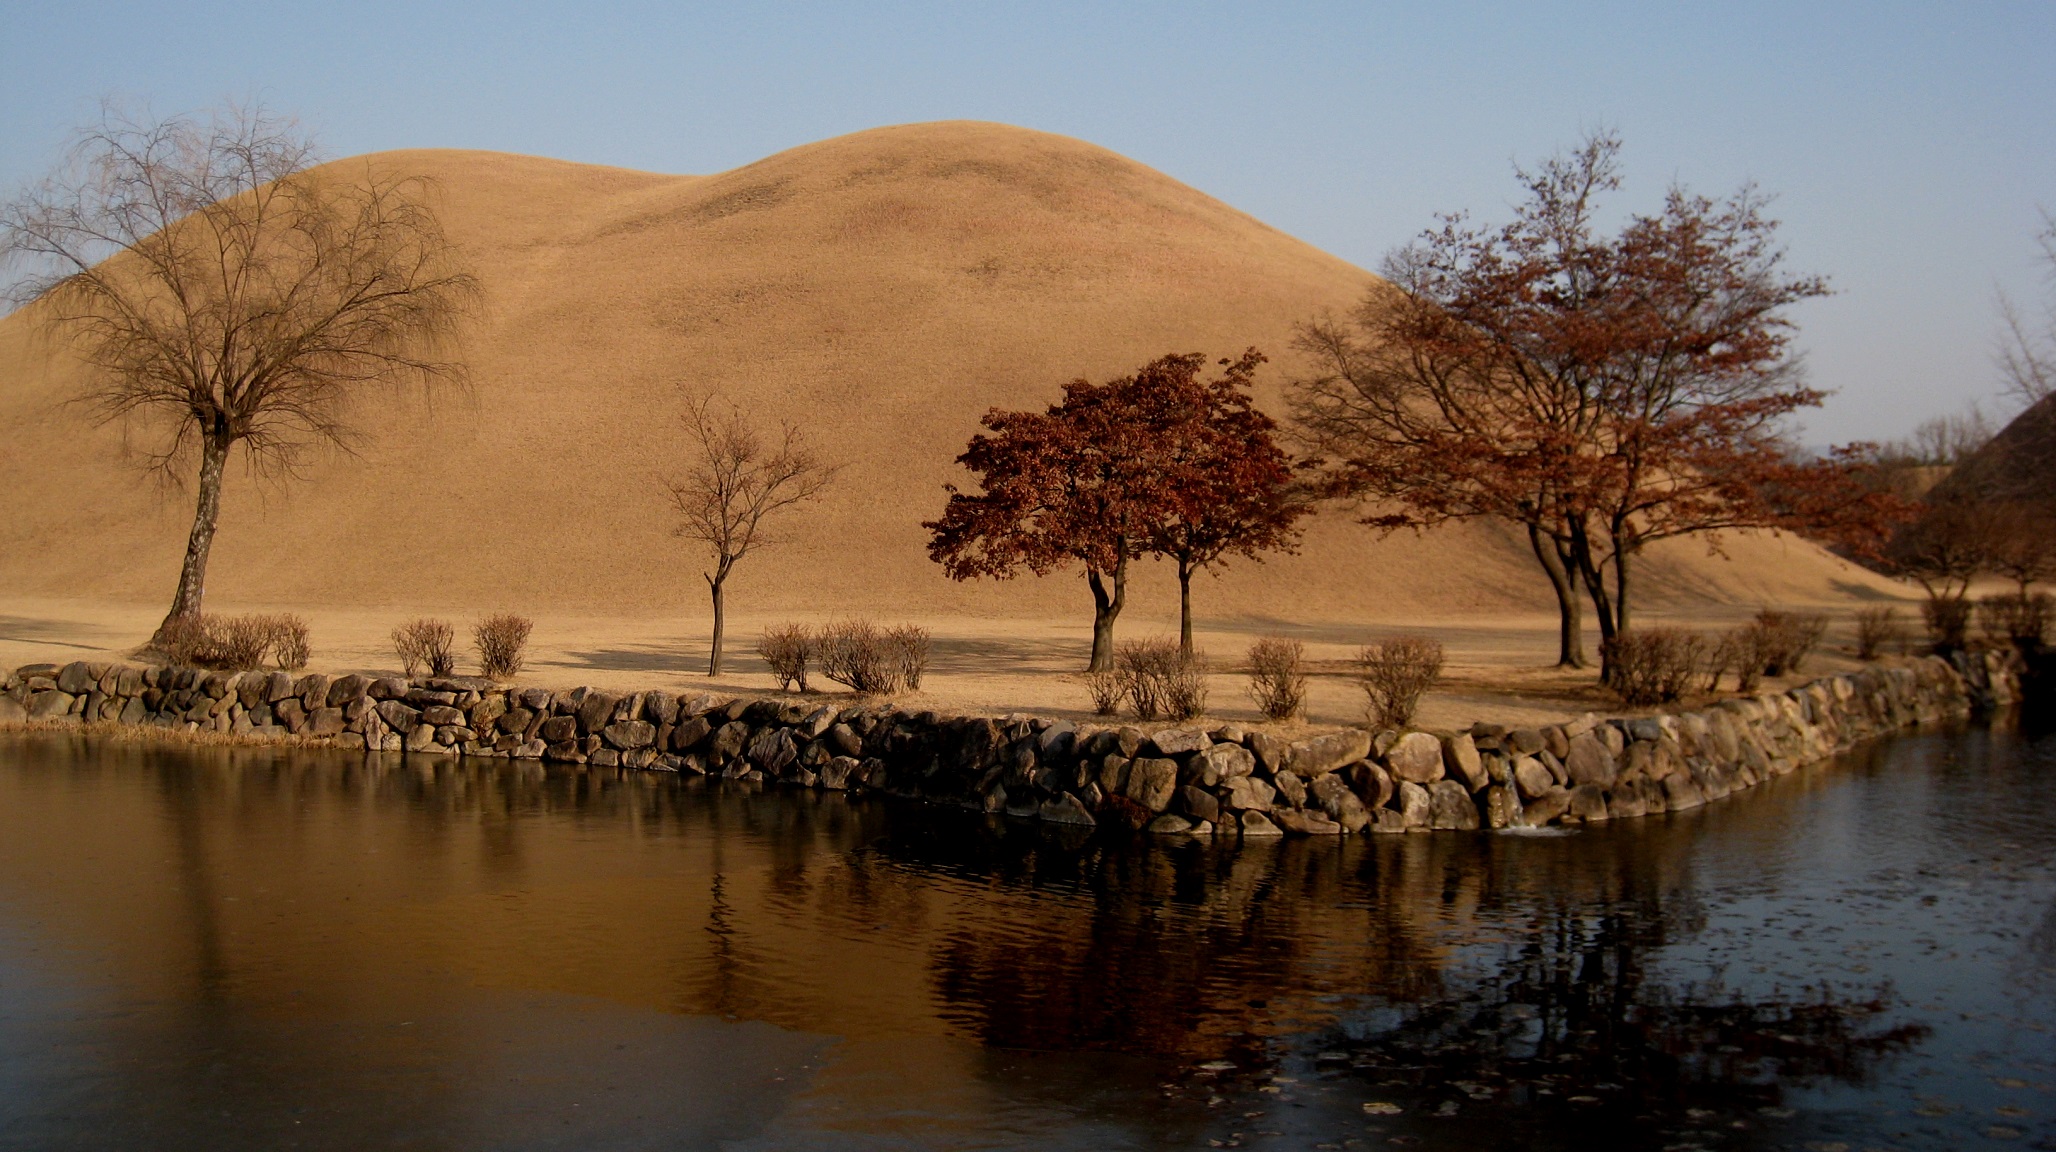 Photo of Gyeongju Silia Burial Mounds by Rick Cox - https://www.flickr.com/photos/rickcox/